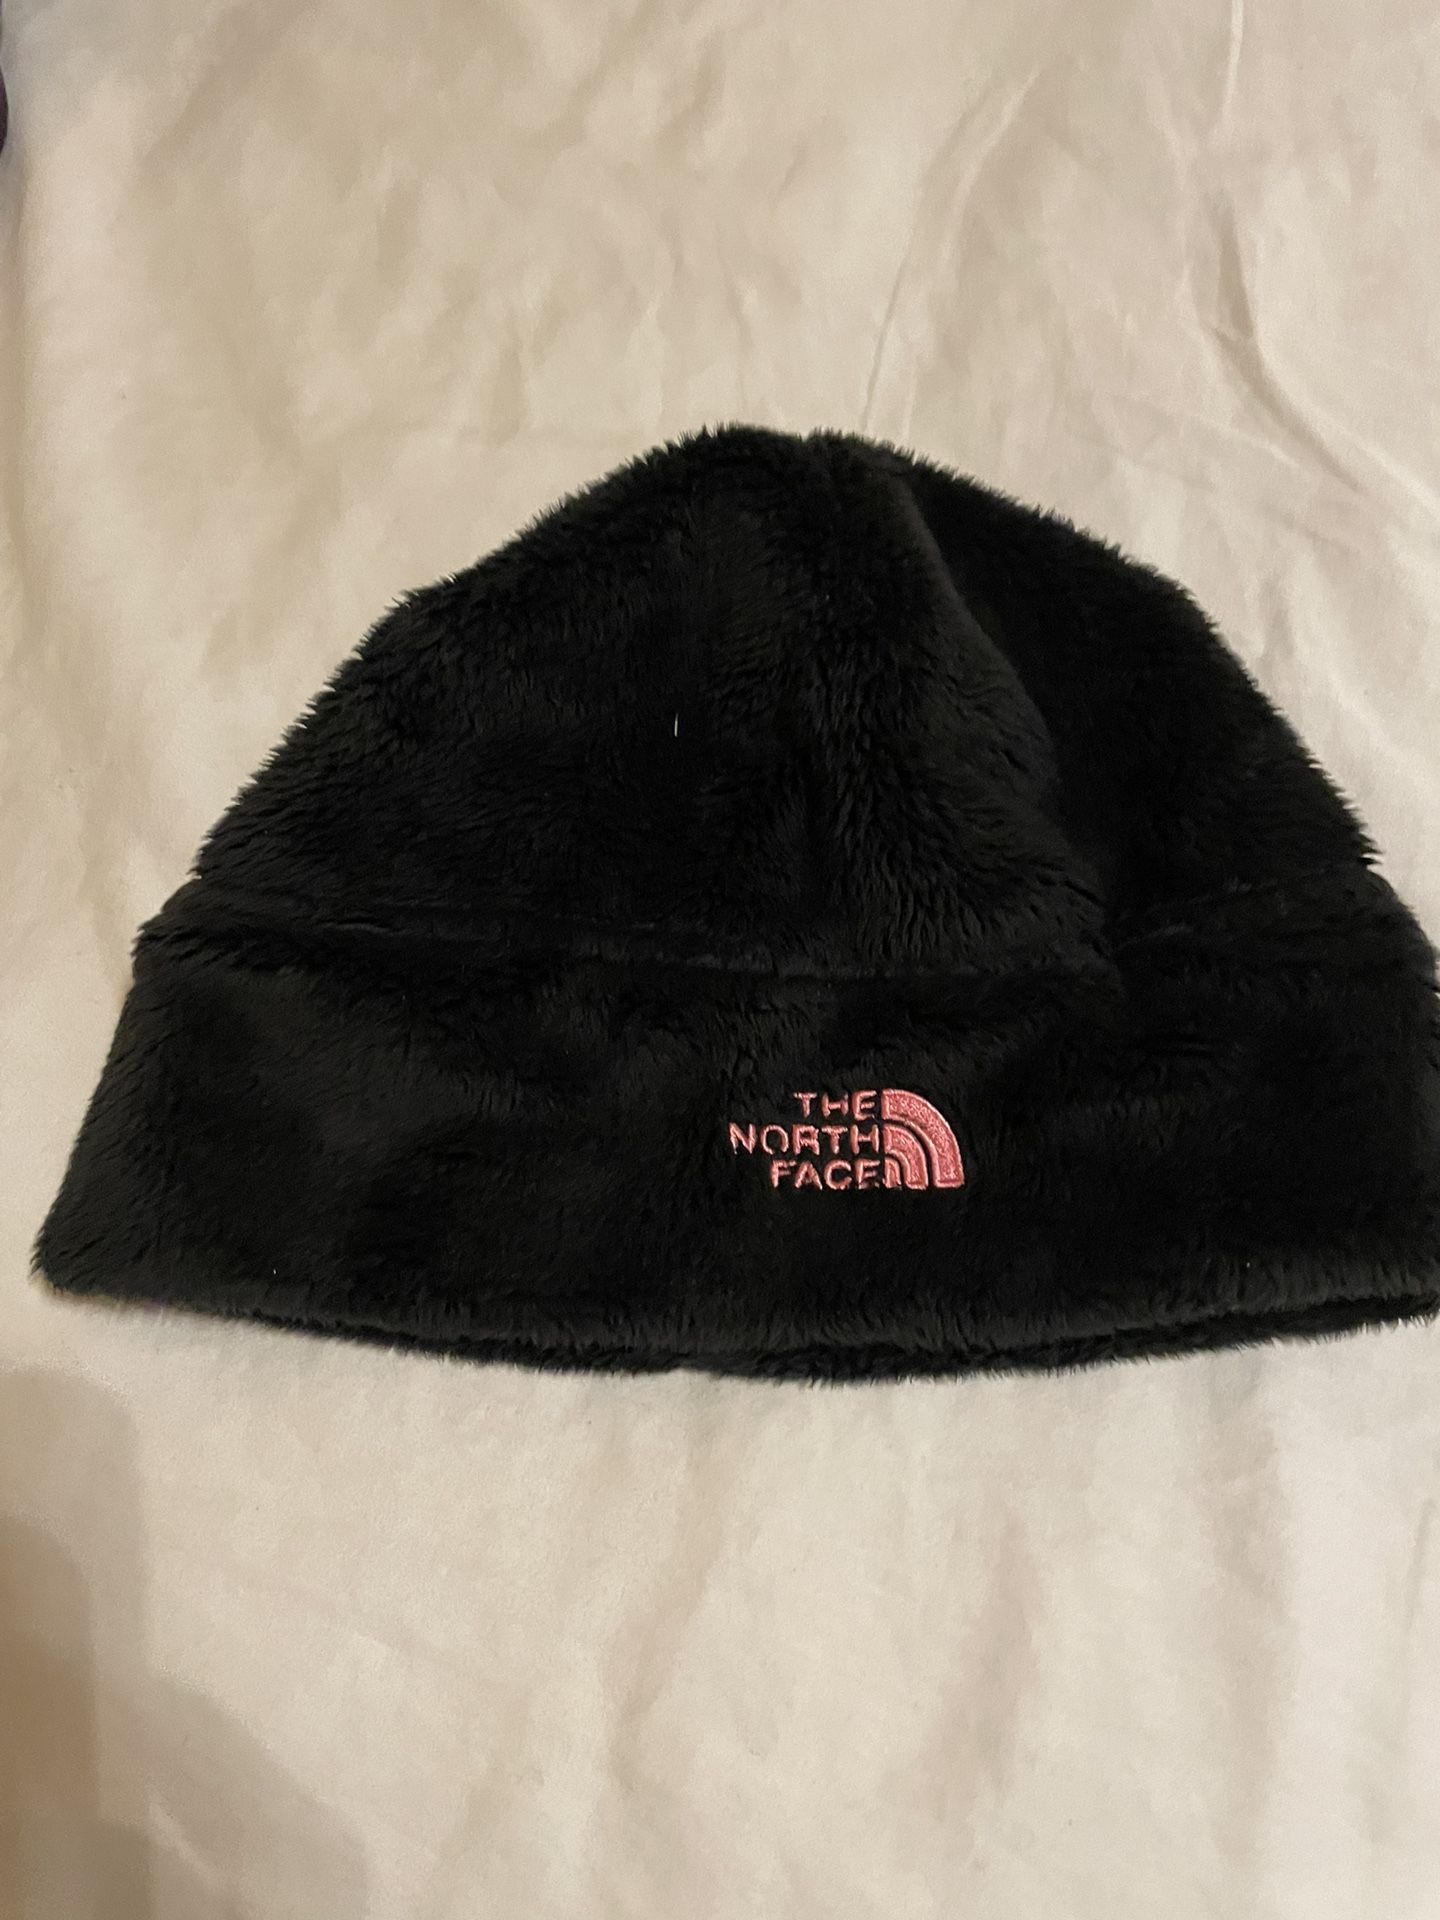 Northface Ladies Hat